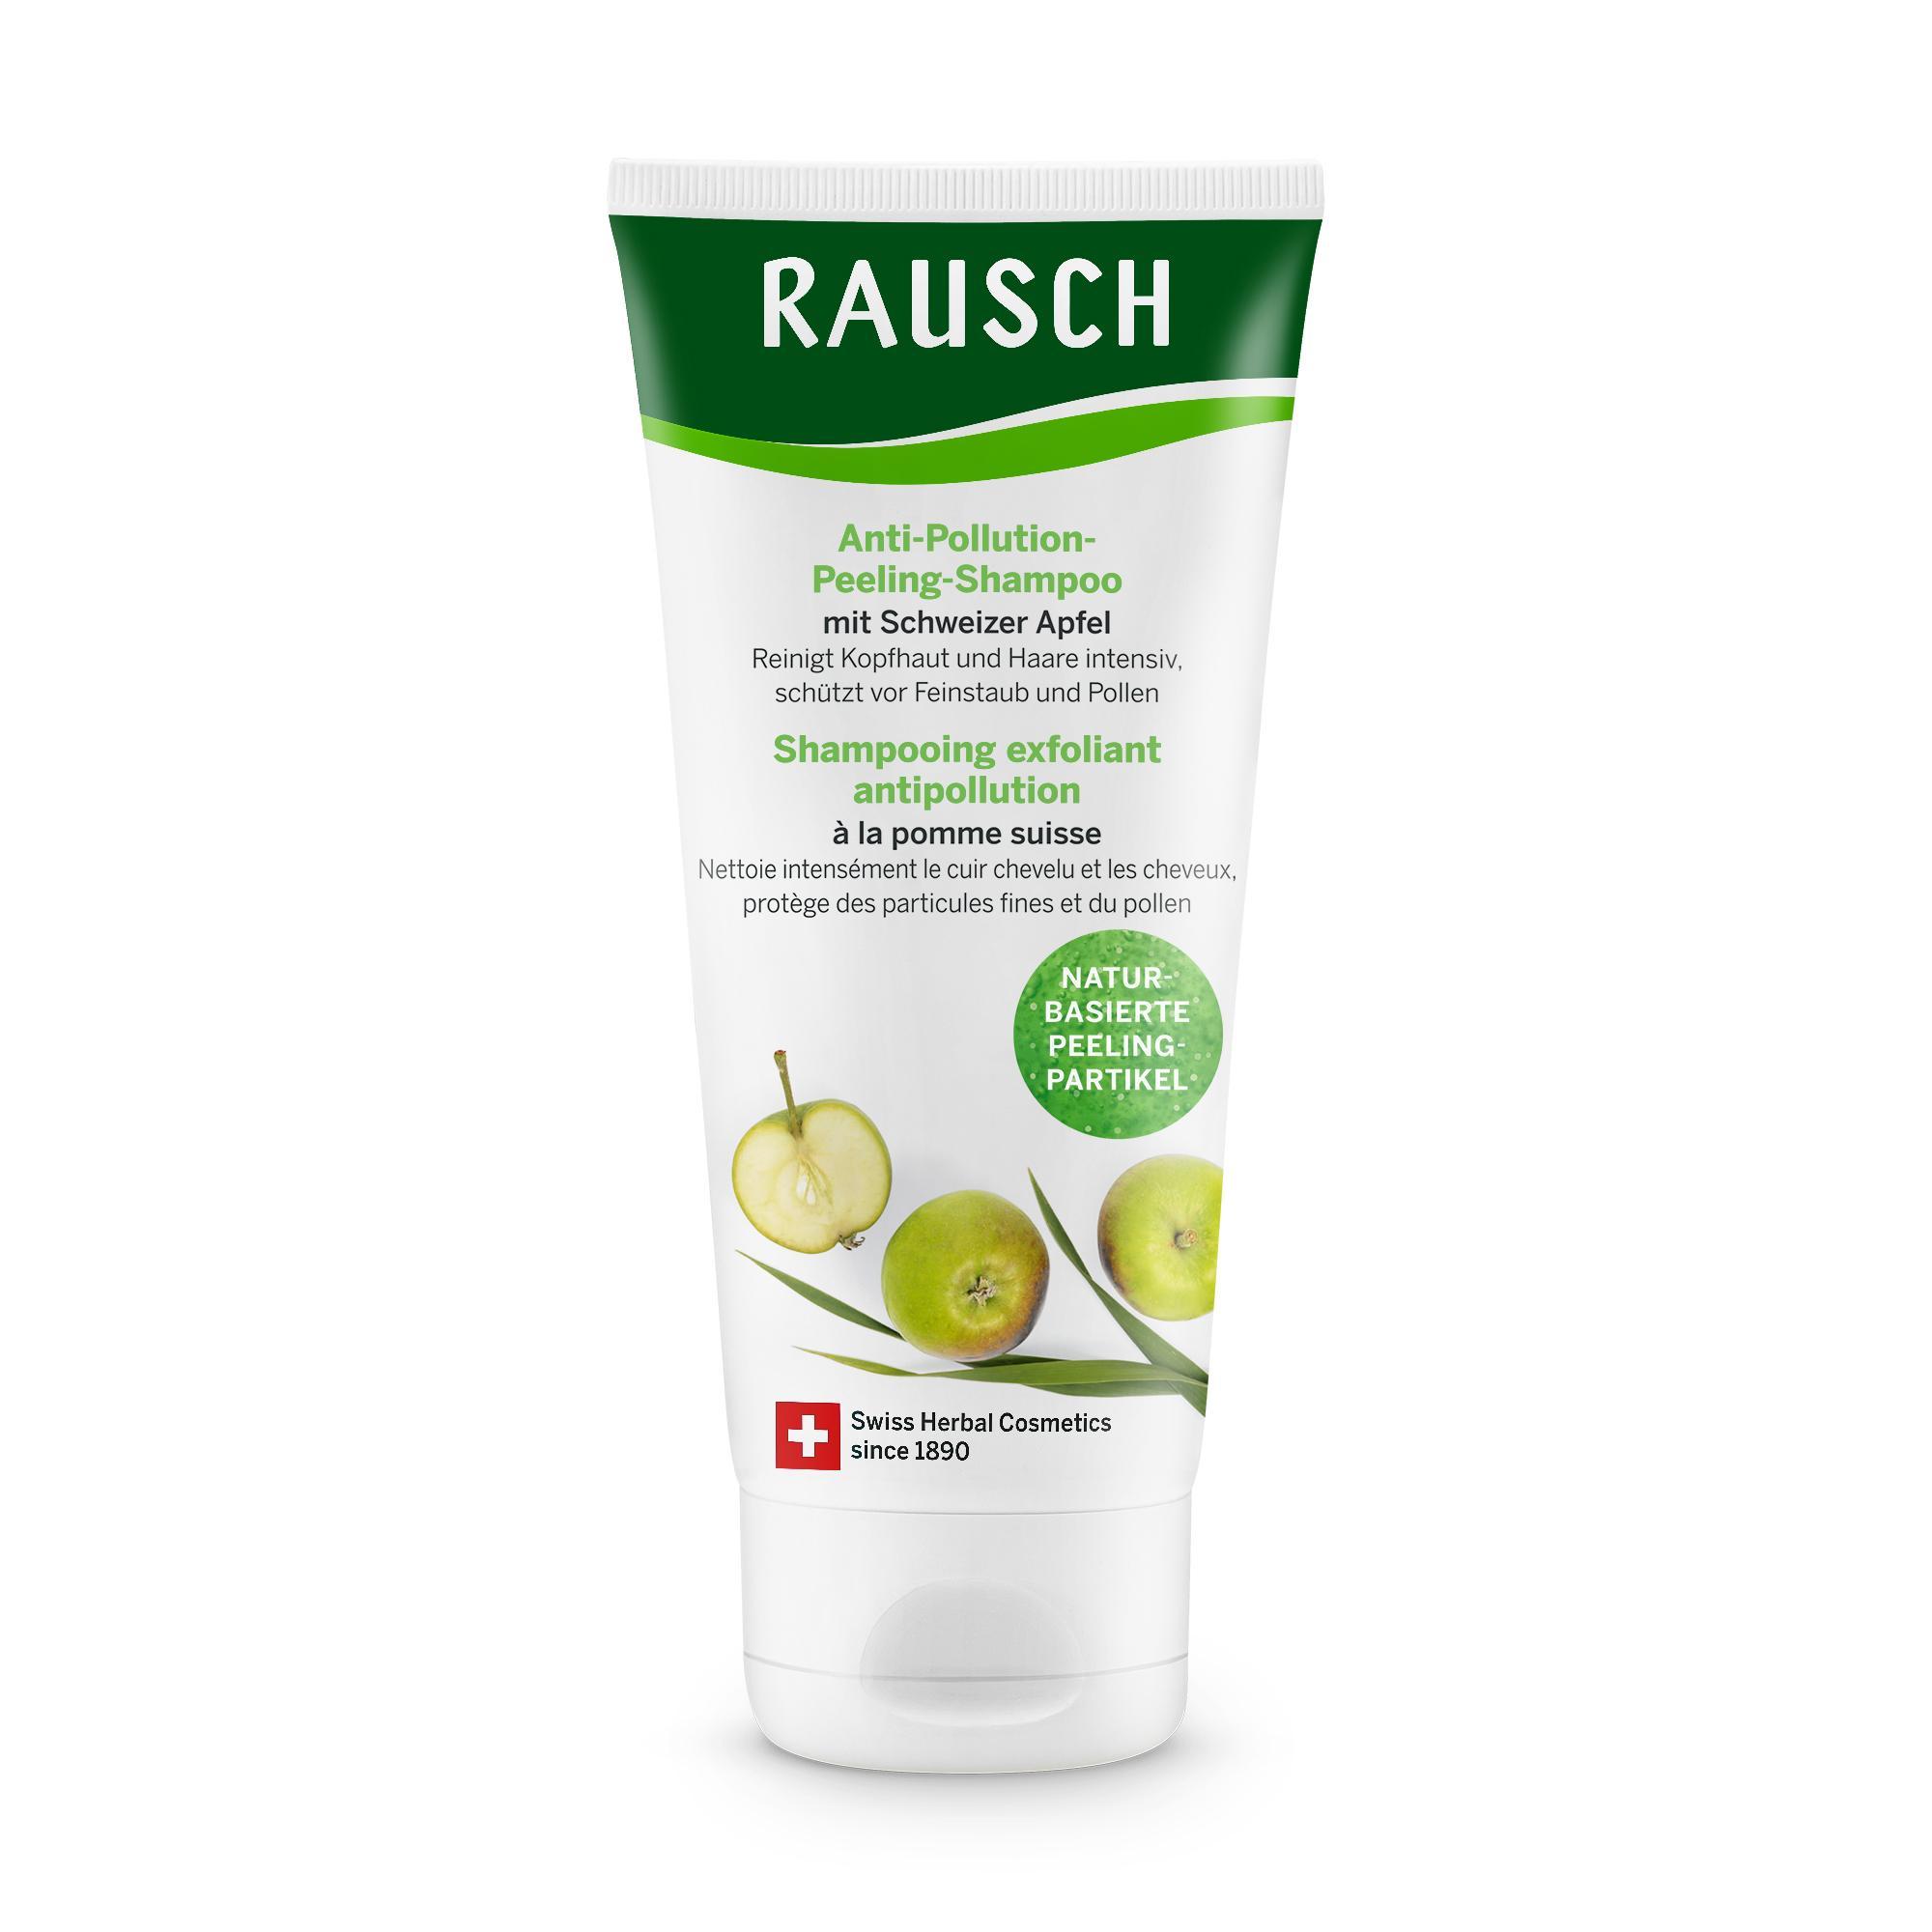 Anti-Pollution - Peeling-Shampoo mit Schweizer Apfel